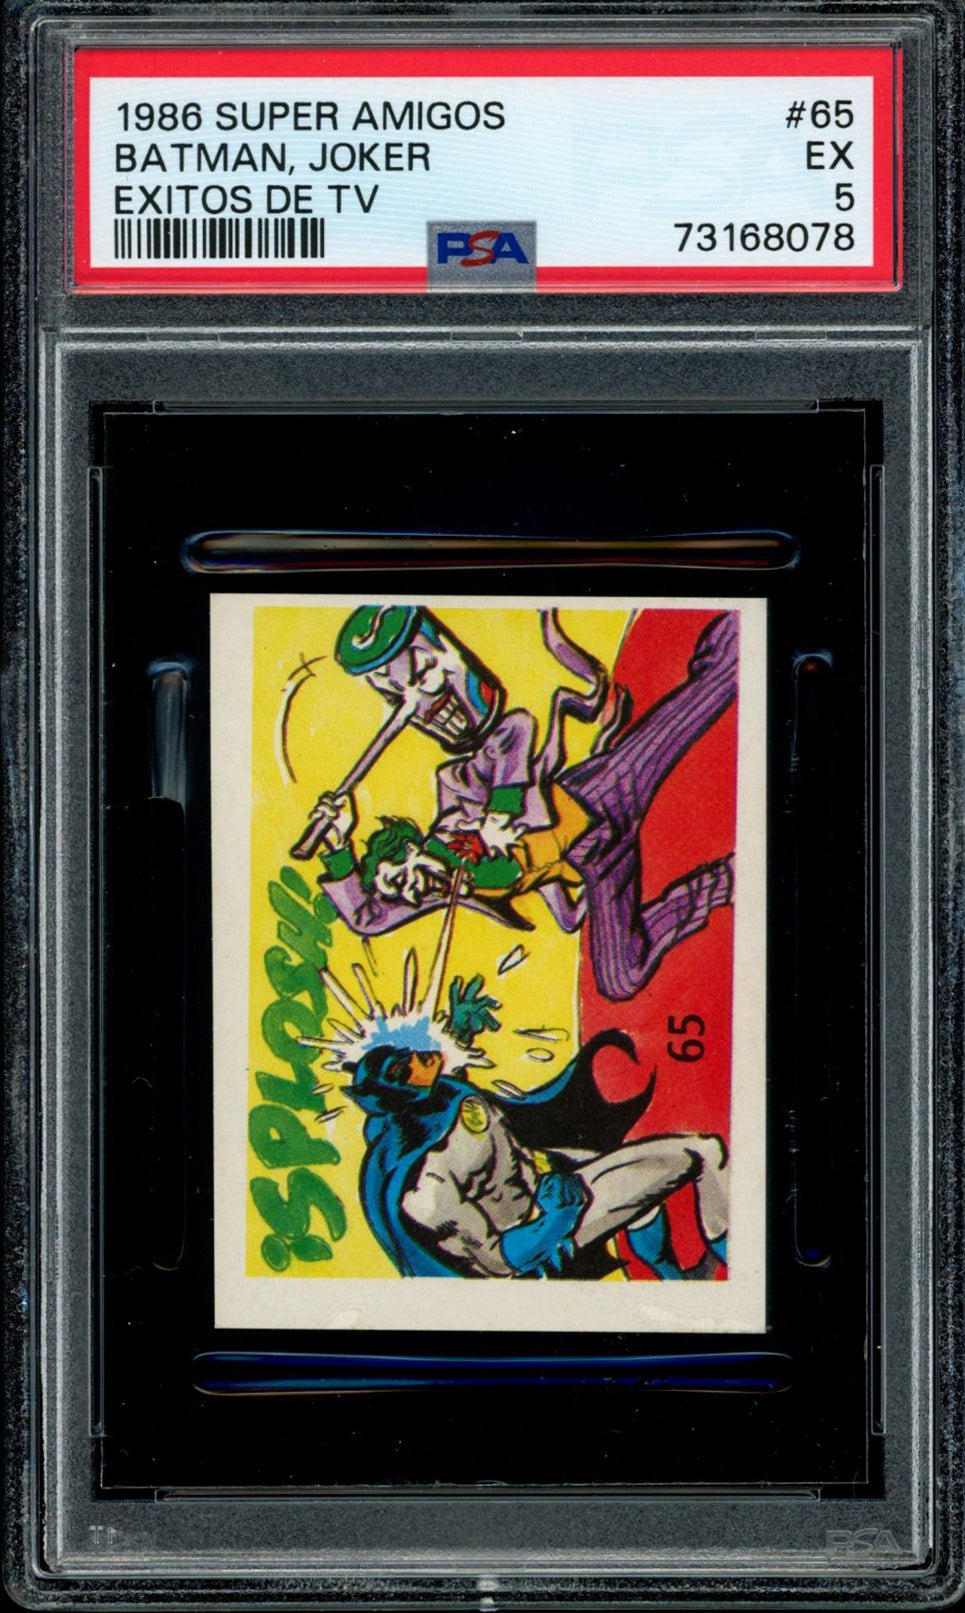 BATMAN & JOKER PSA 5 1986 Reyauca Super Amigos Exitos de TV #65 DC Comics Base Graded Cards - Hobby Gems